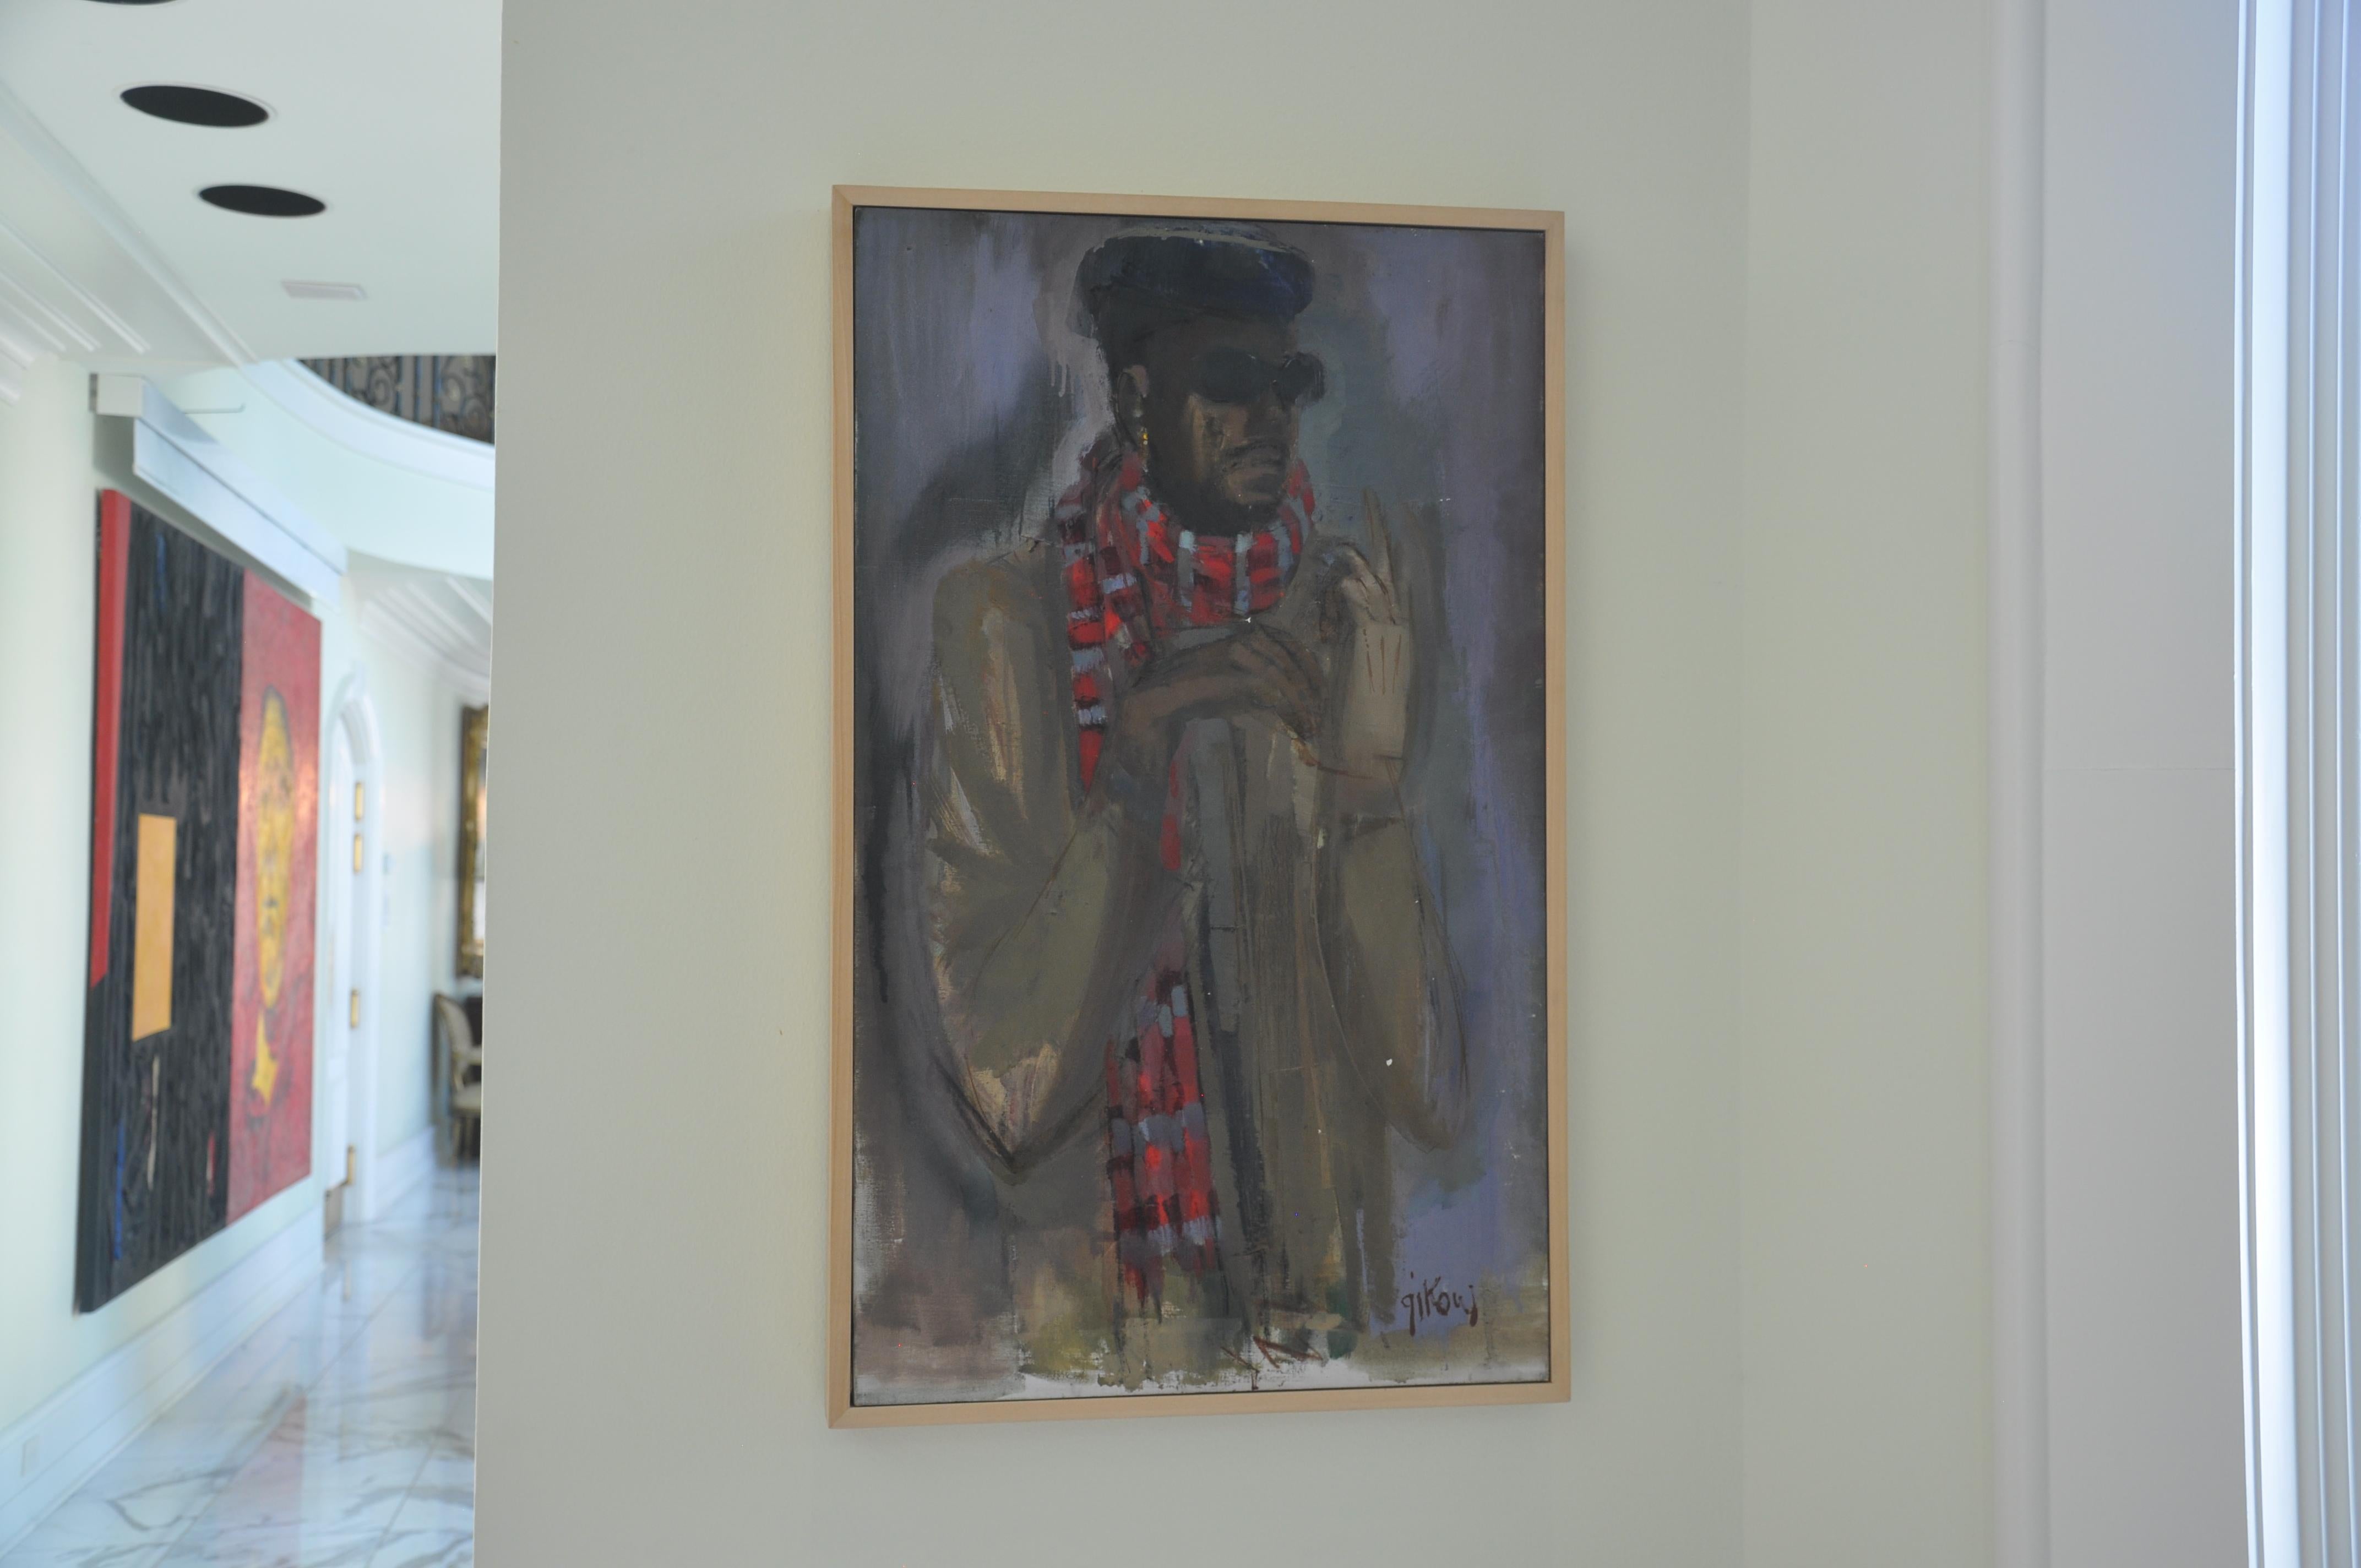 Black Man (Nachkriegszeit), Painting, von Ruth Gikow